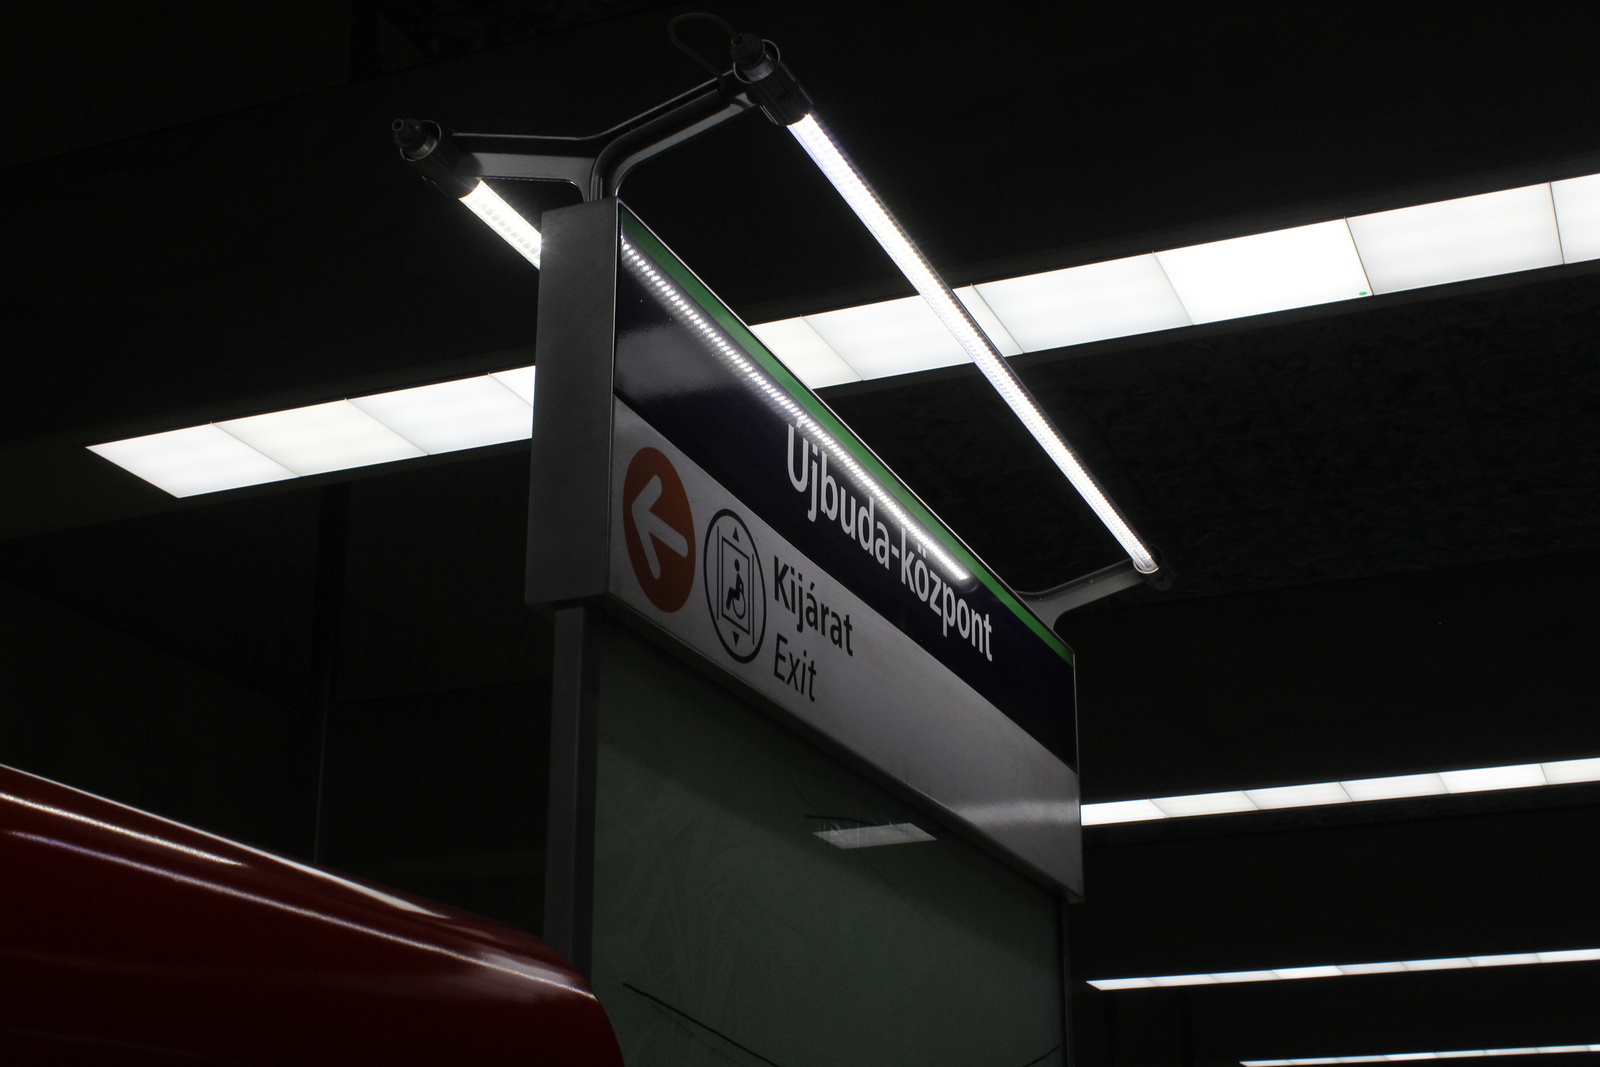 Metro4-UjbudaKozpont-20150726-12